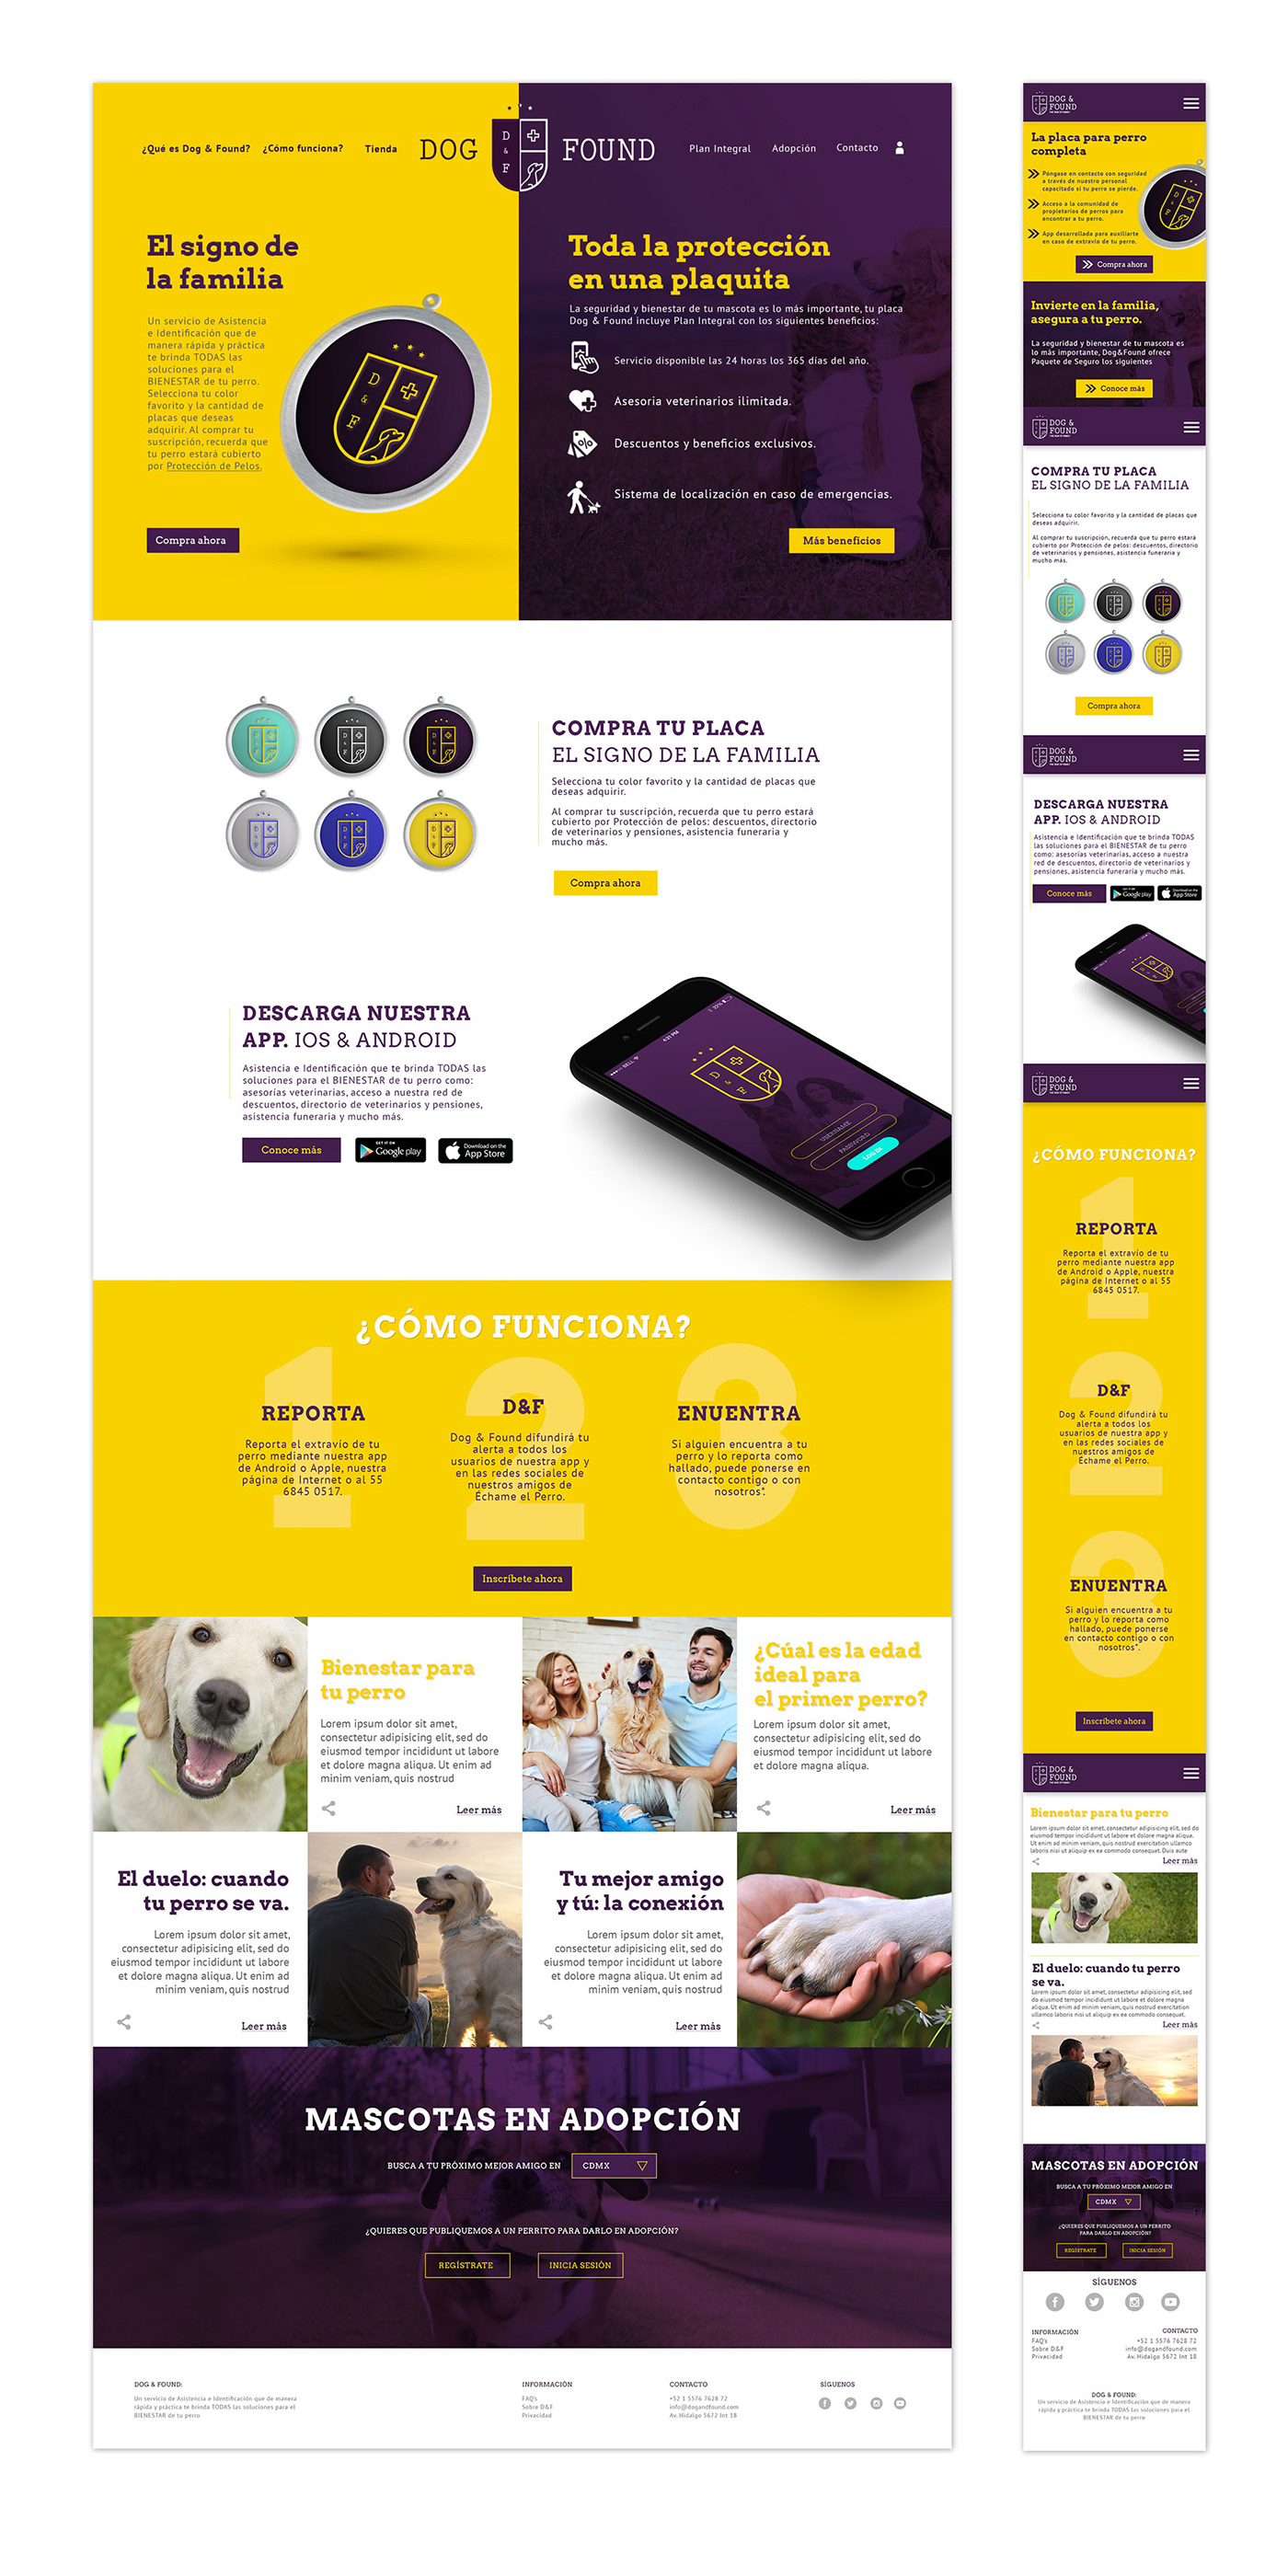 dog tag e-commerce e-Commerce website Mobile responsive interface design ux/ui design